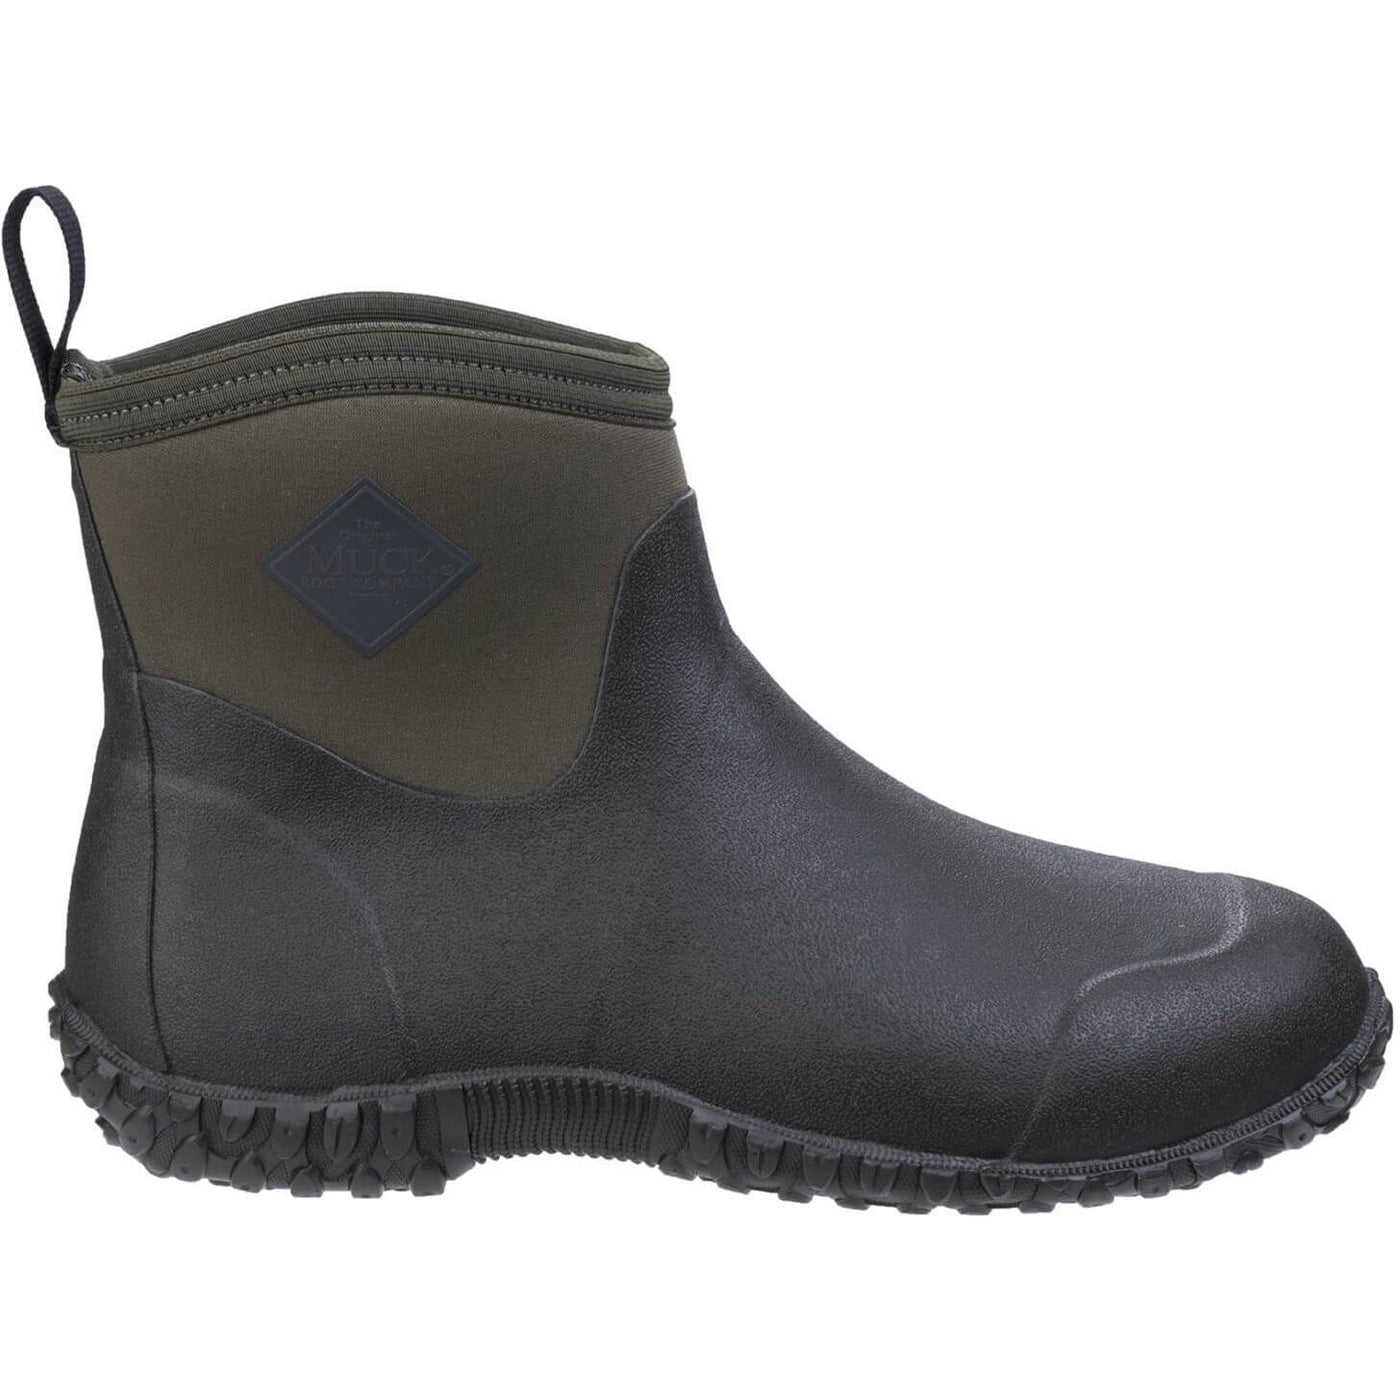 Muck Boots Muckster II Ankle All Purpose Lightweight Shoes Black/Moss 5#colour_black-moss